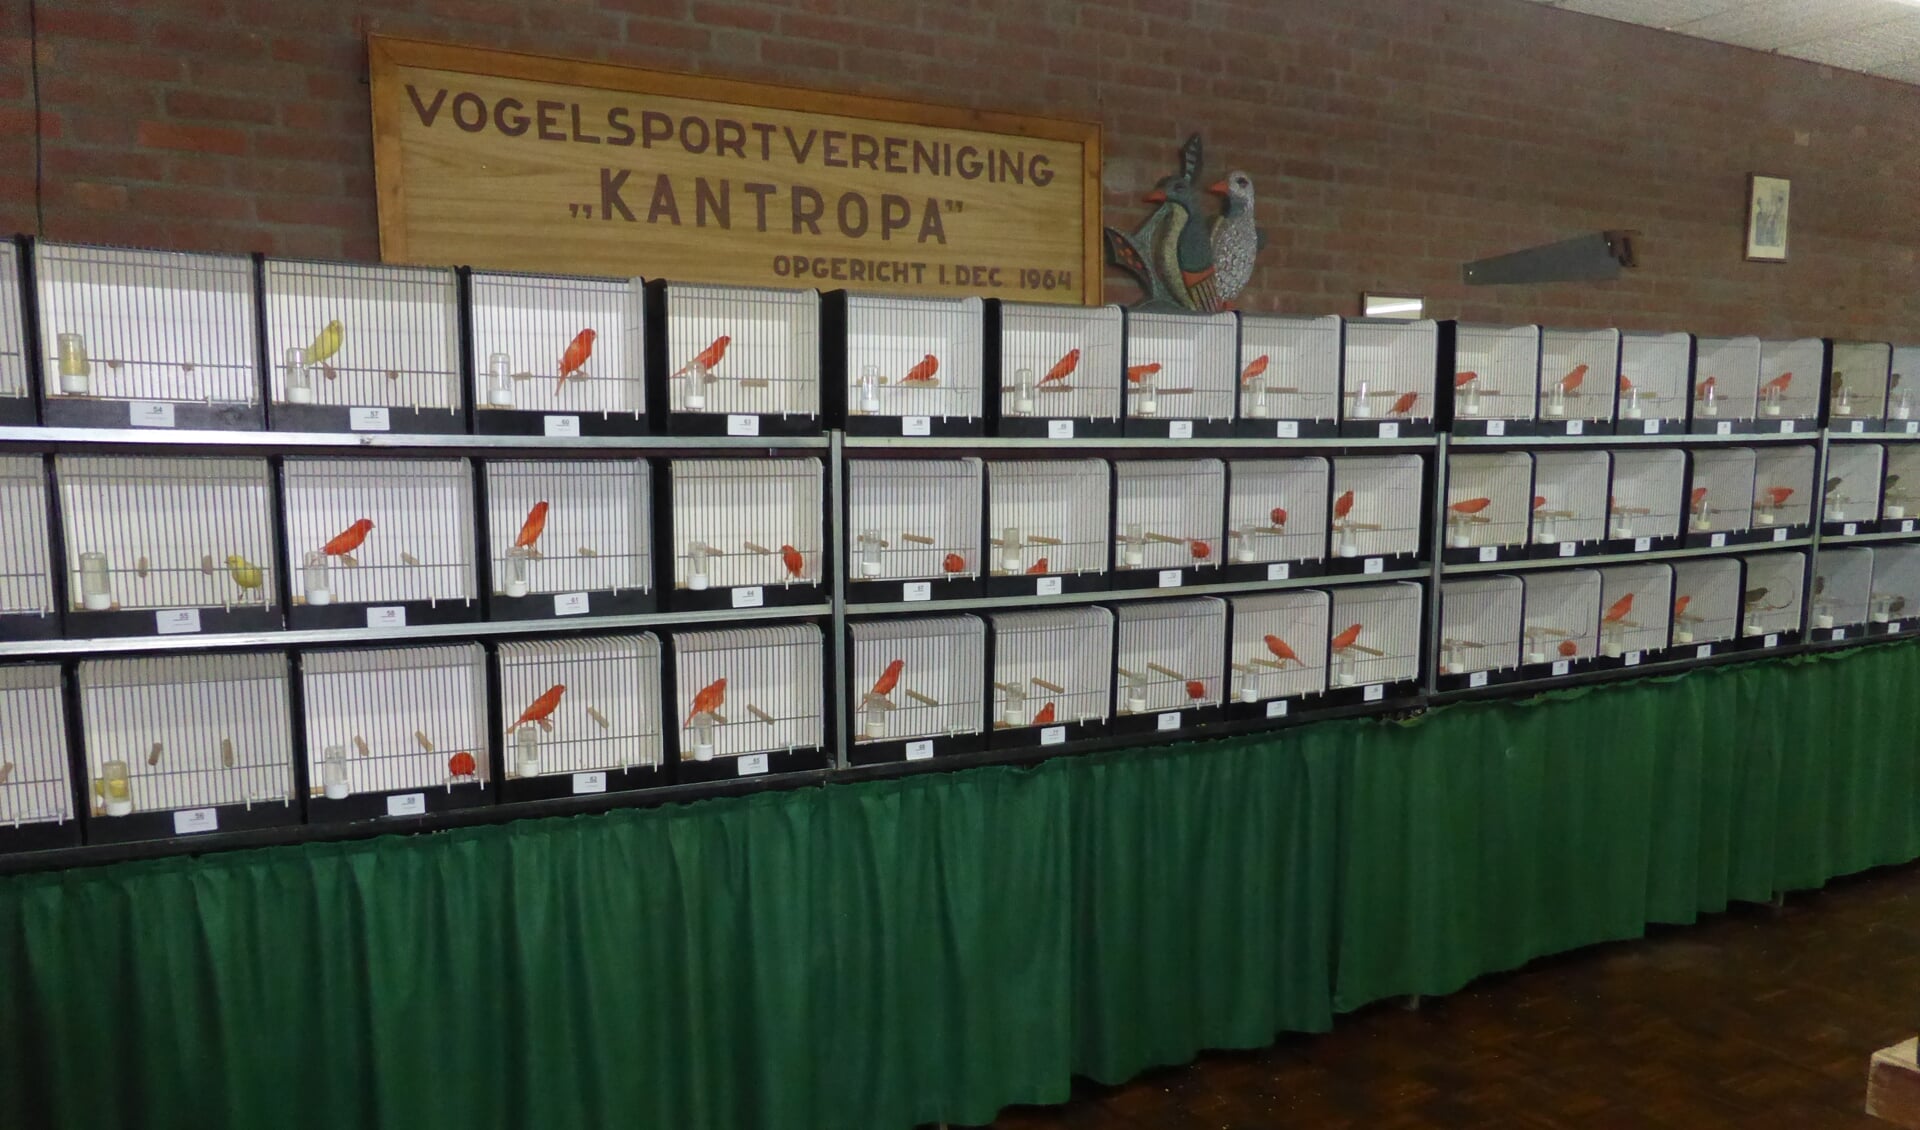 Vogeltentoonstelling Kantropa Ooterhout. (foto: Th. Boetzel)